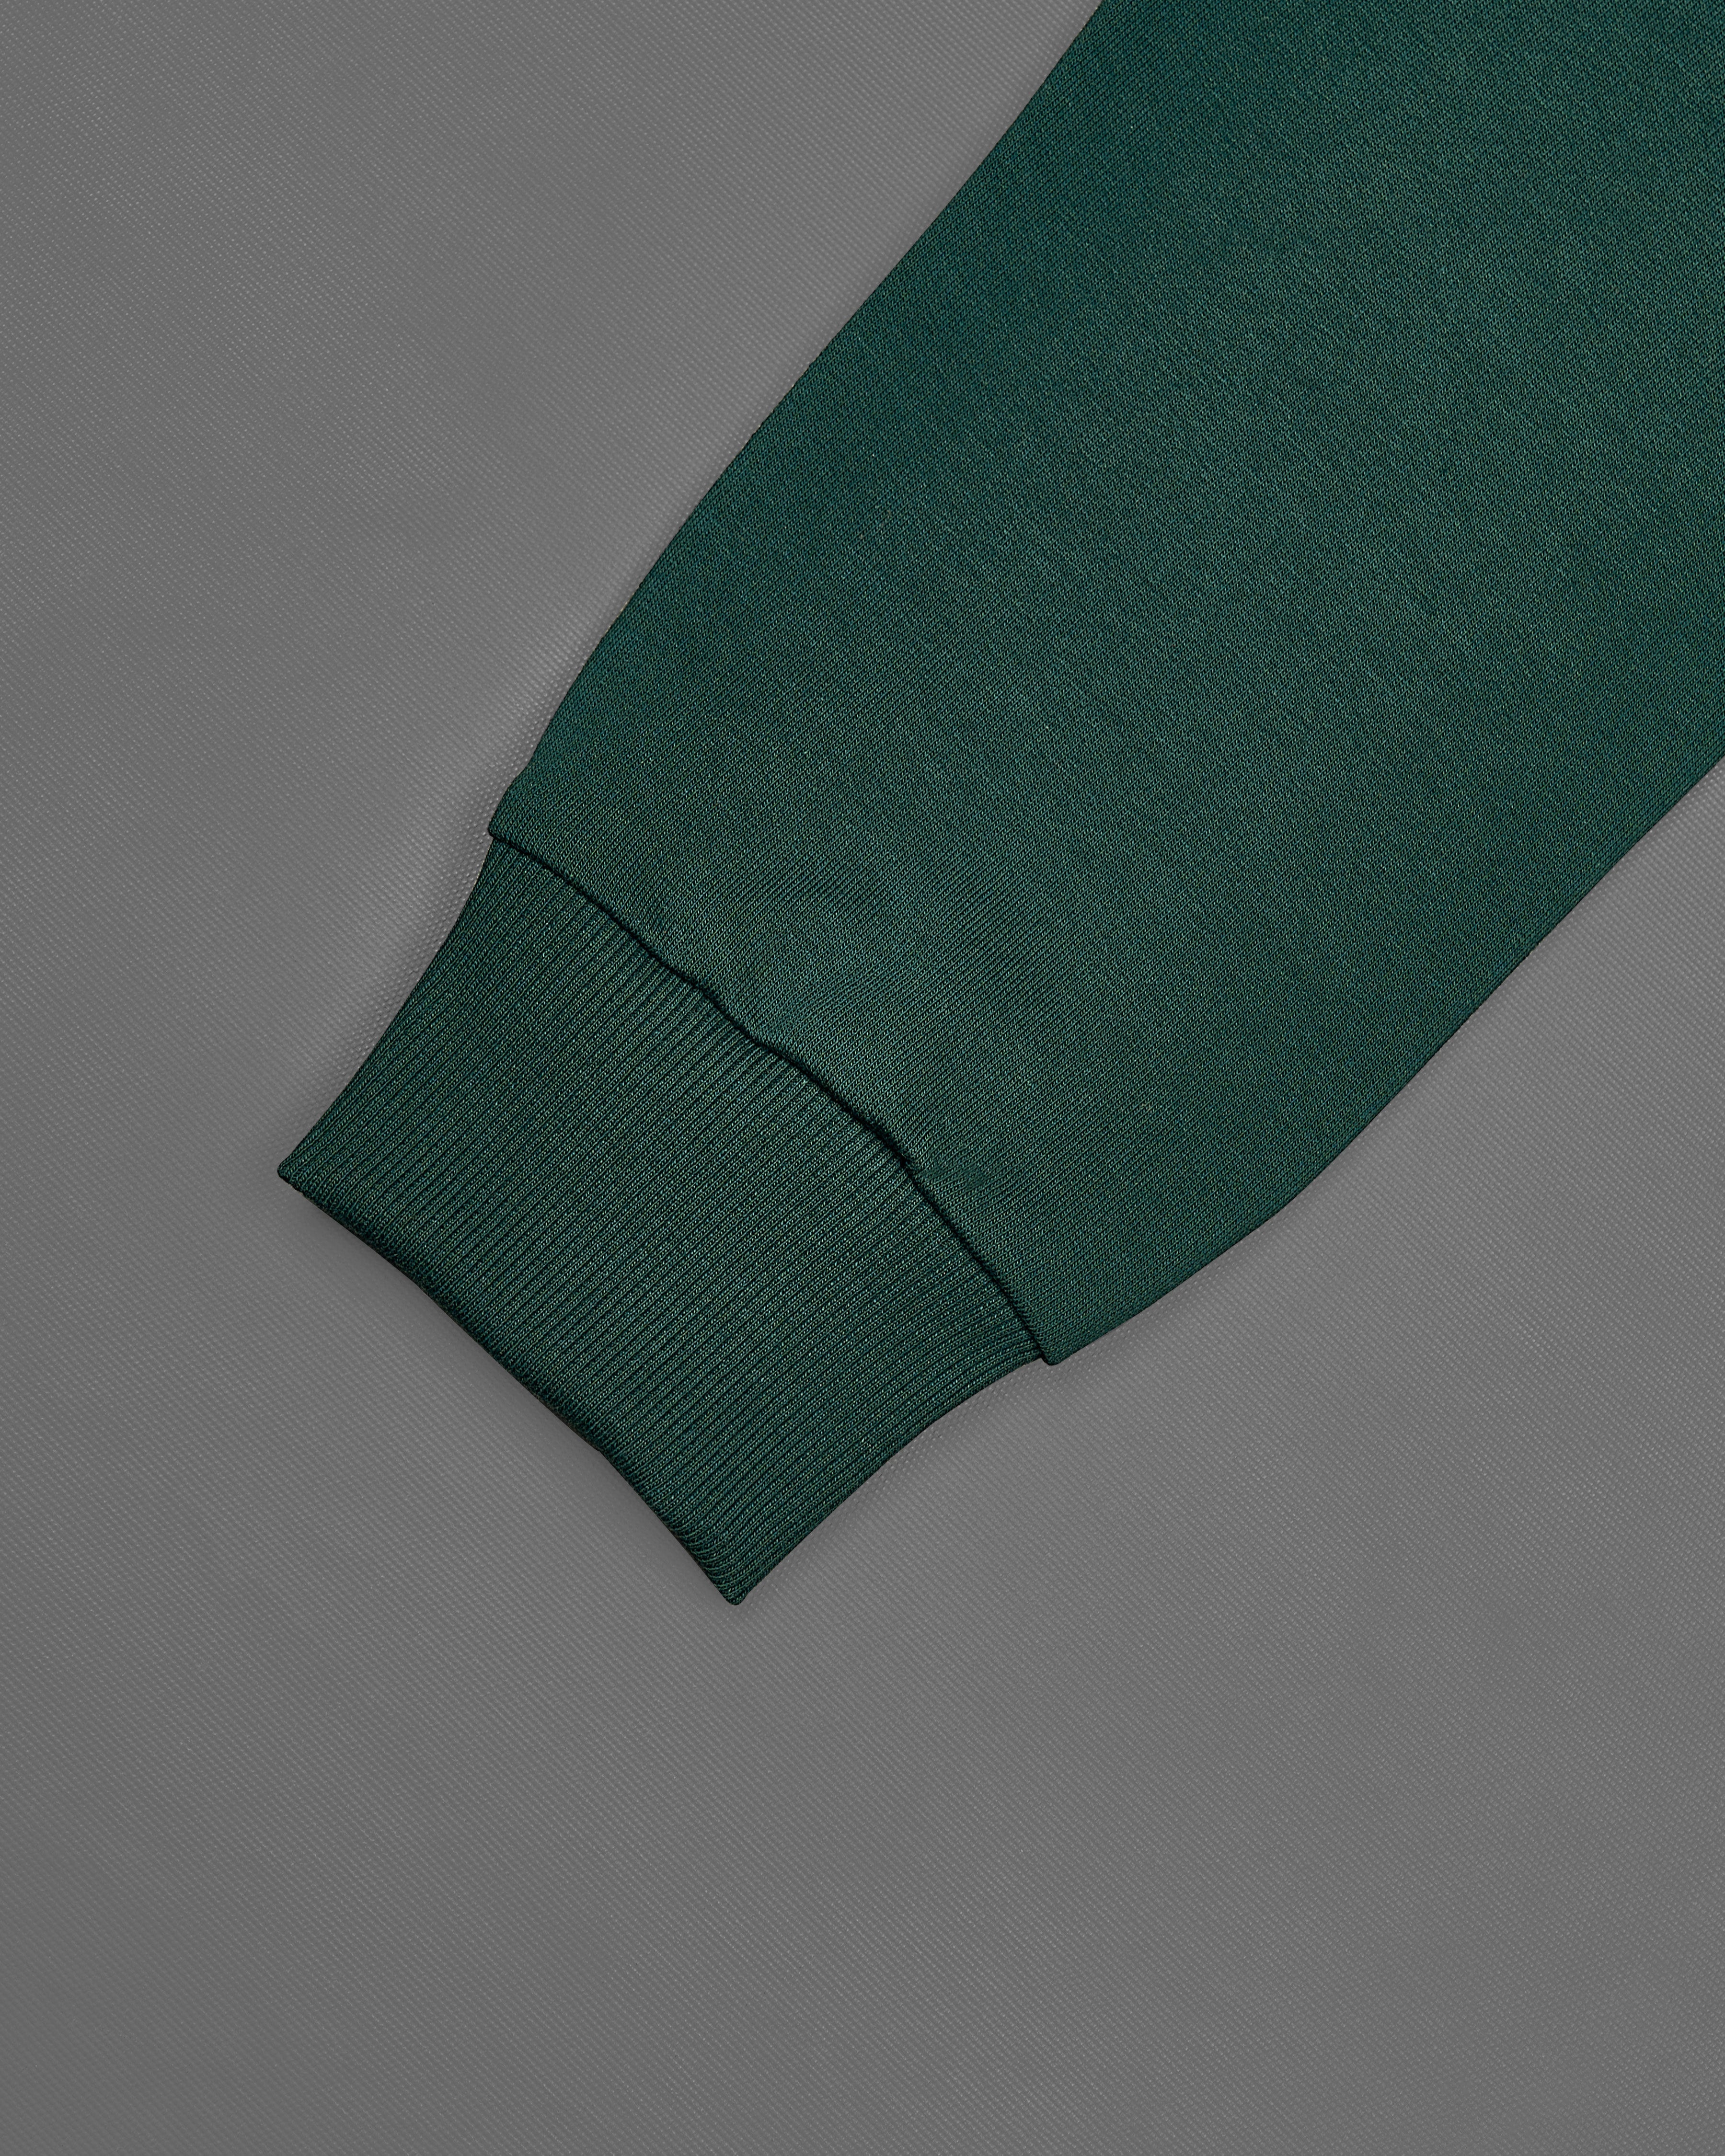 Everglade Green Zipper Closure Full Sleeve Premium Cotton Heavyweight Polo Sweatshirt TS678-S, TS678-M, TS678-L, TS678-XL, TS678-XXL